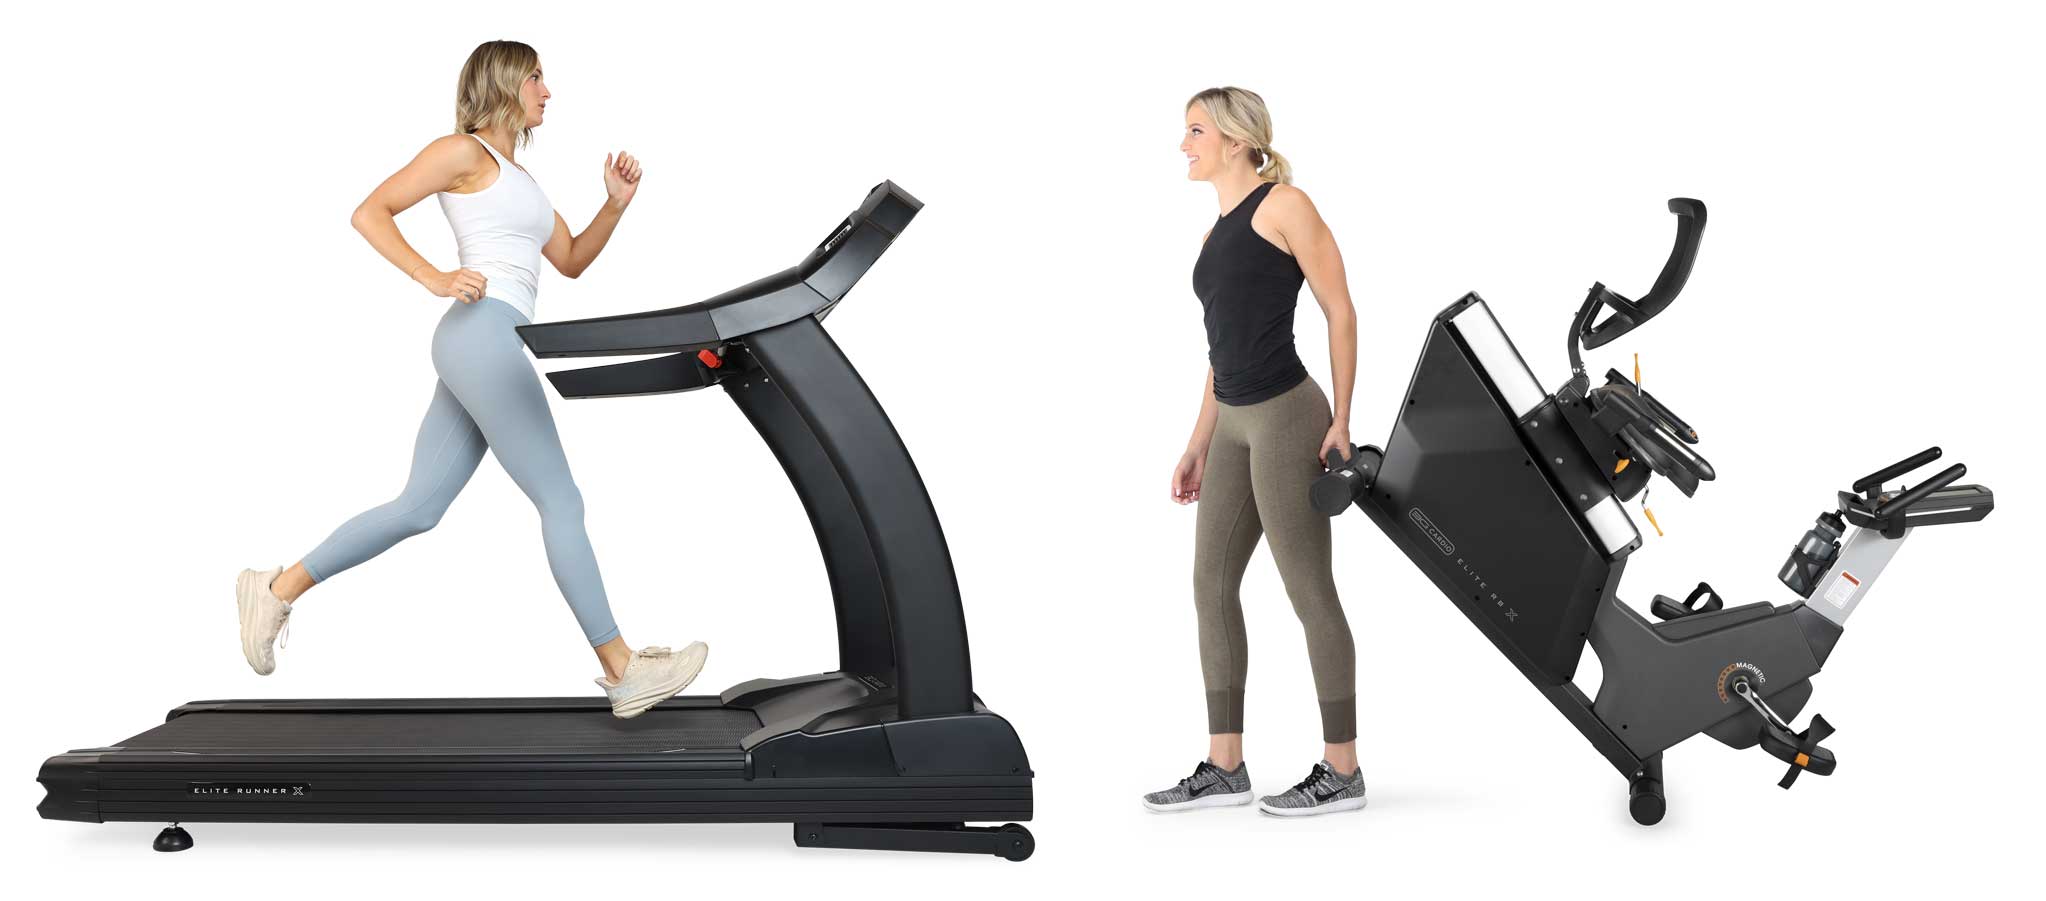 3G Cardio Fitness Equipment - Treadmills, Exercise Bikes and more